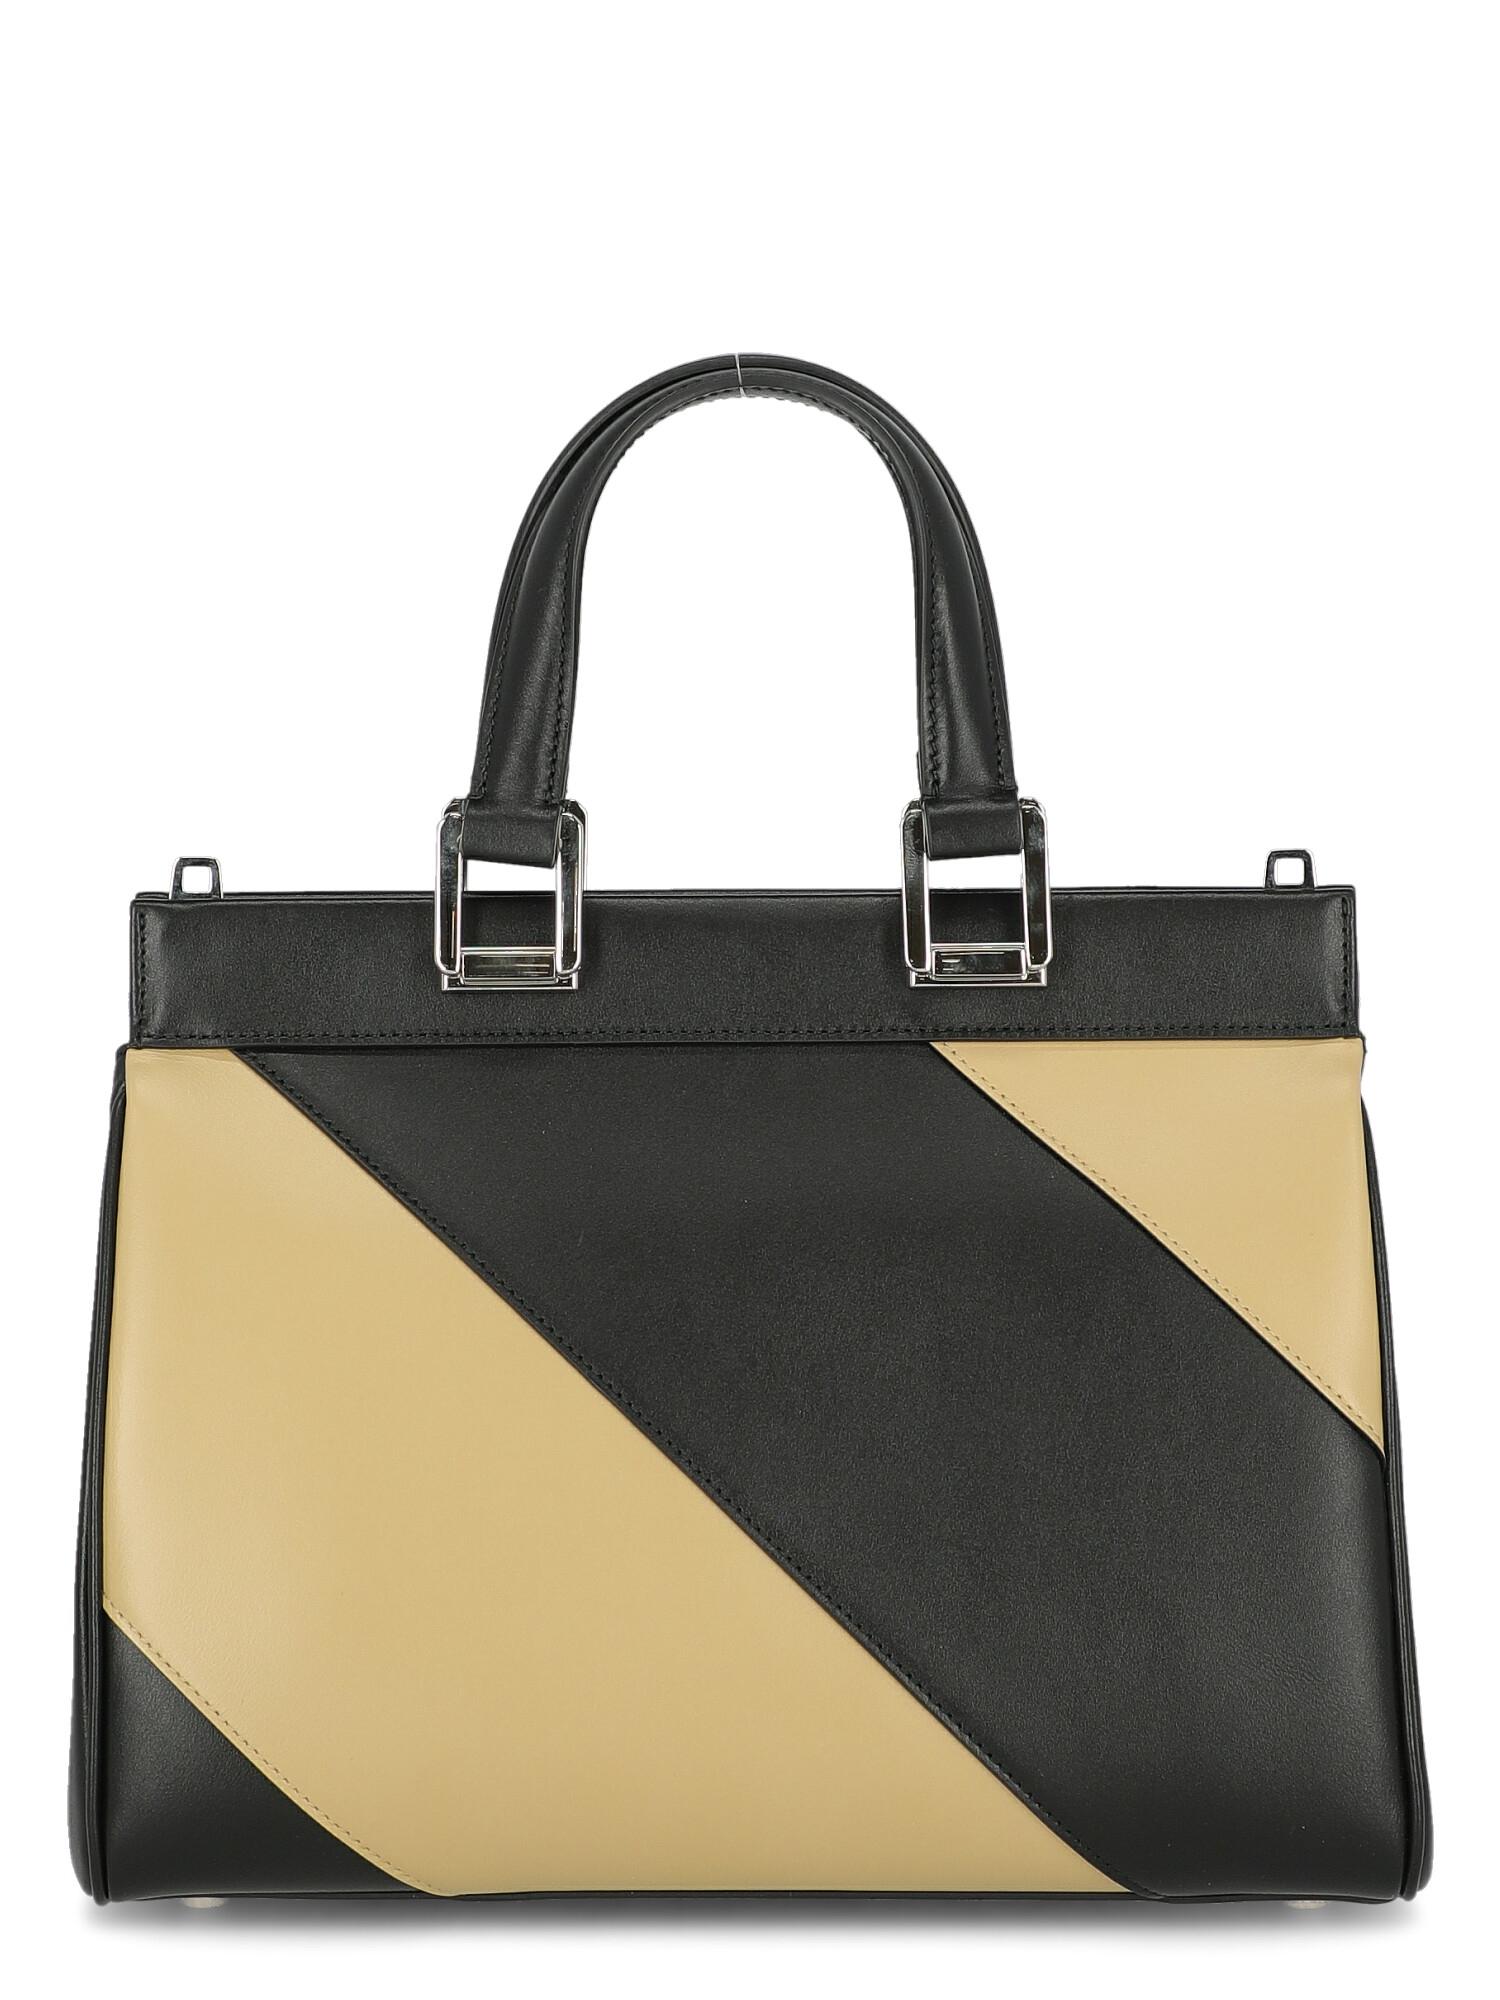 Gucci Women's Handbag Zumi Beige/Black Leather For Sale 1